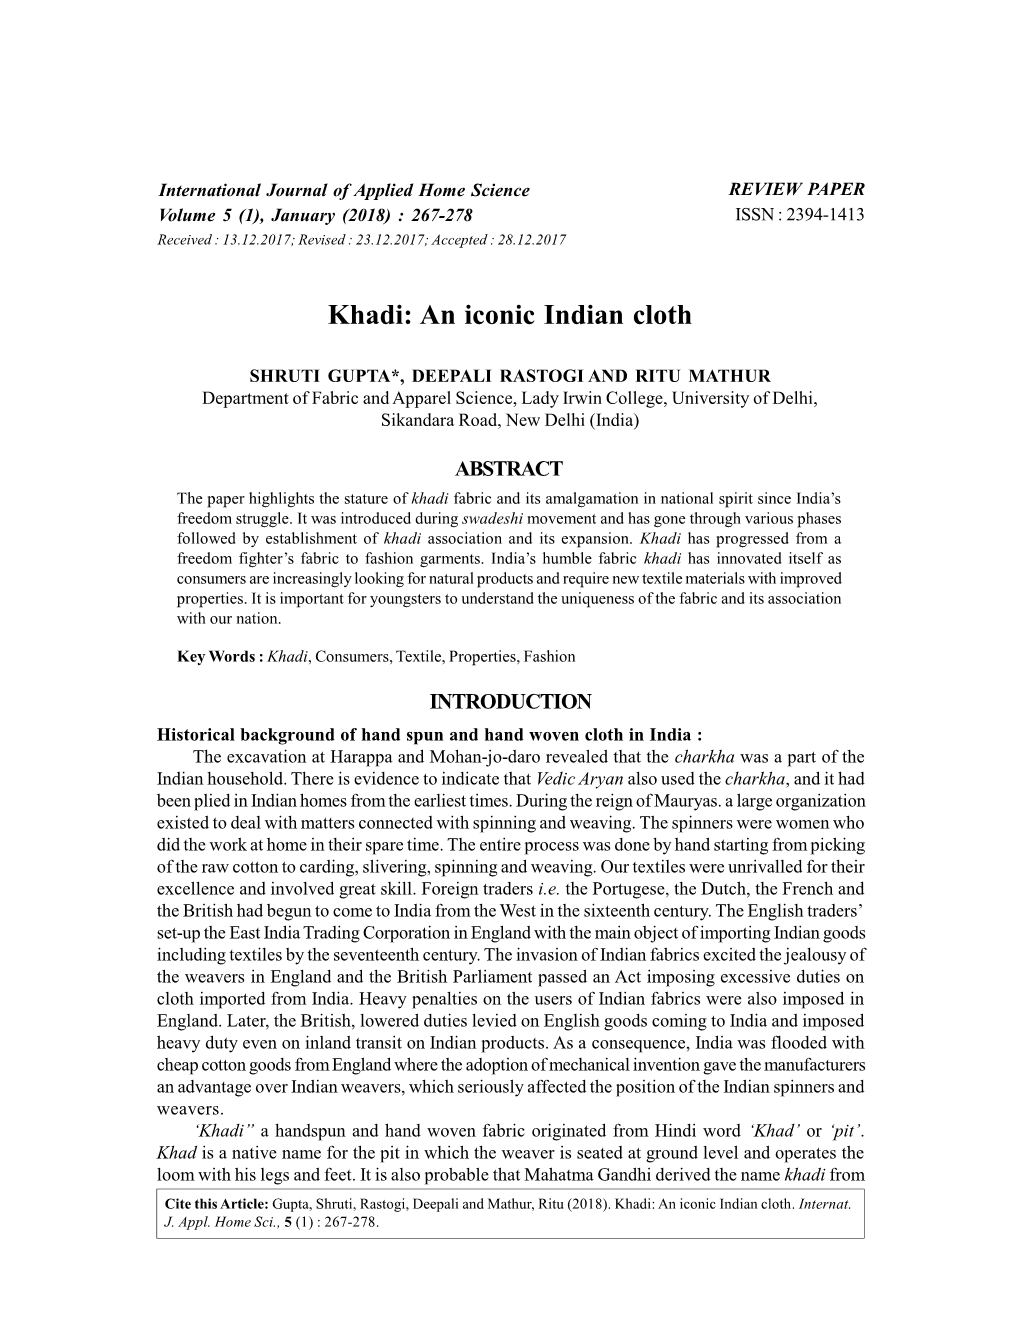 Khadi: an Iconic Indian Cloth